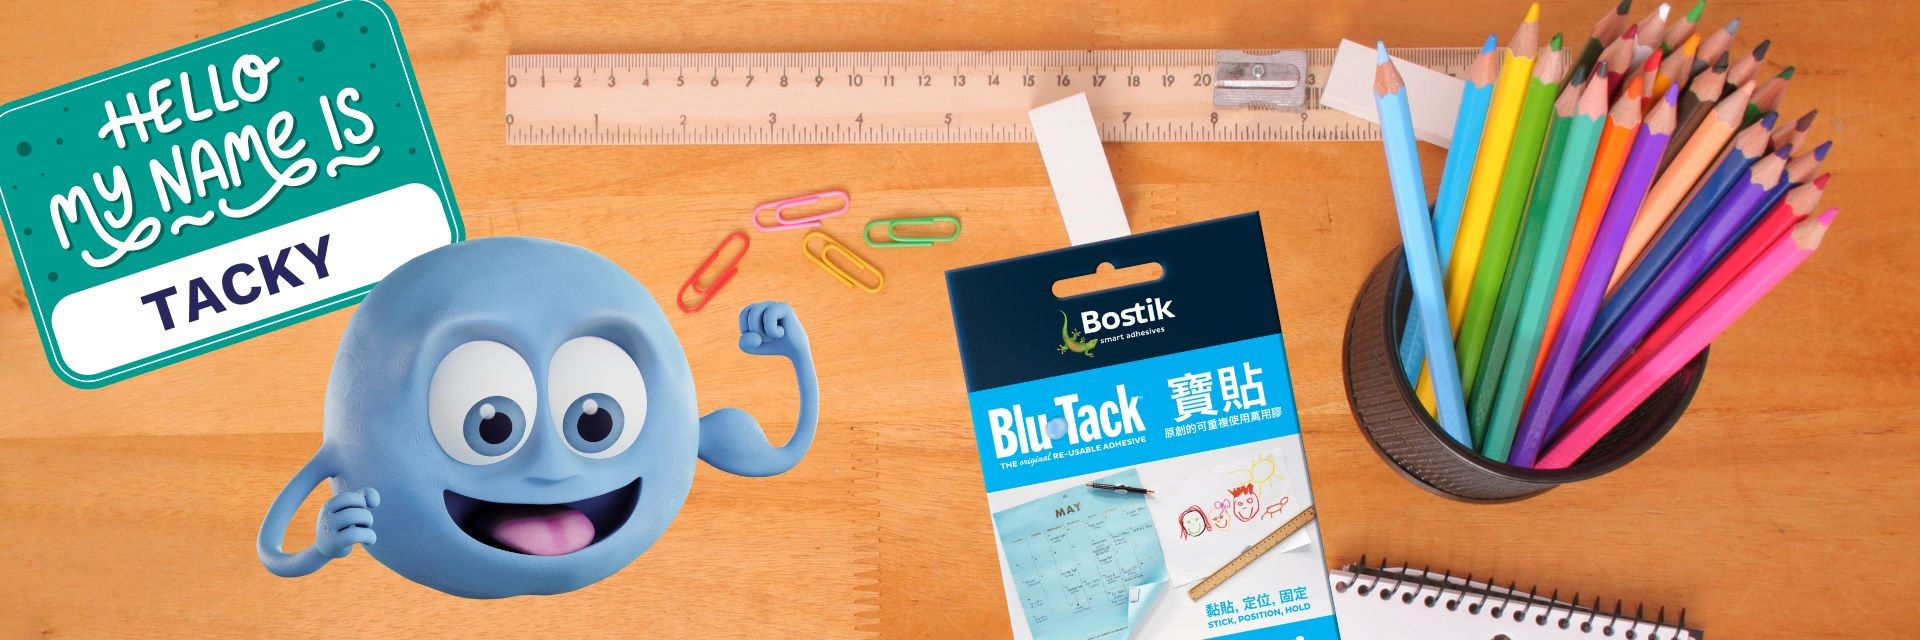 Bostik Blu Tack® Grey, DIY Blu Tack®